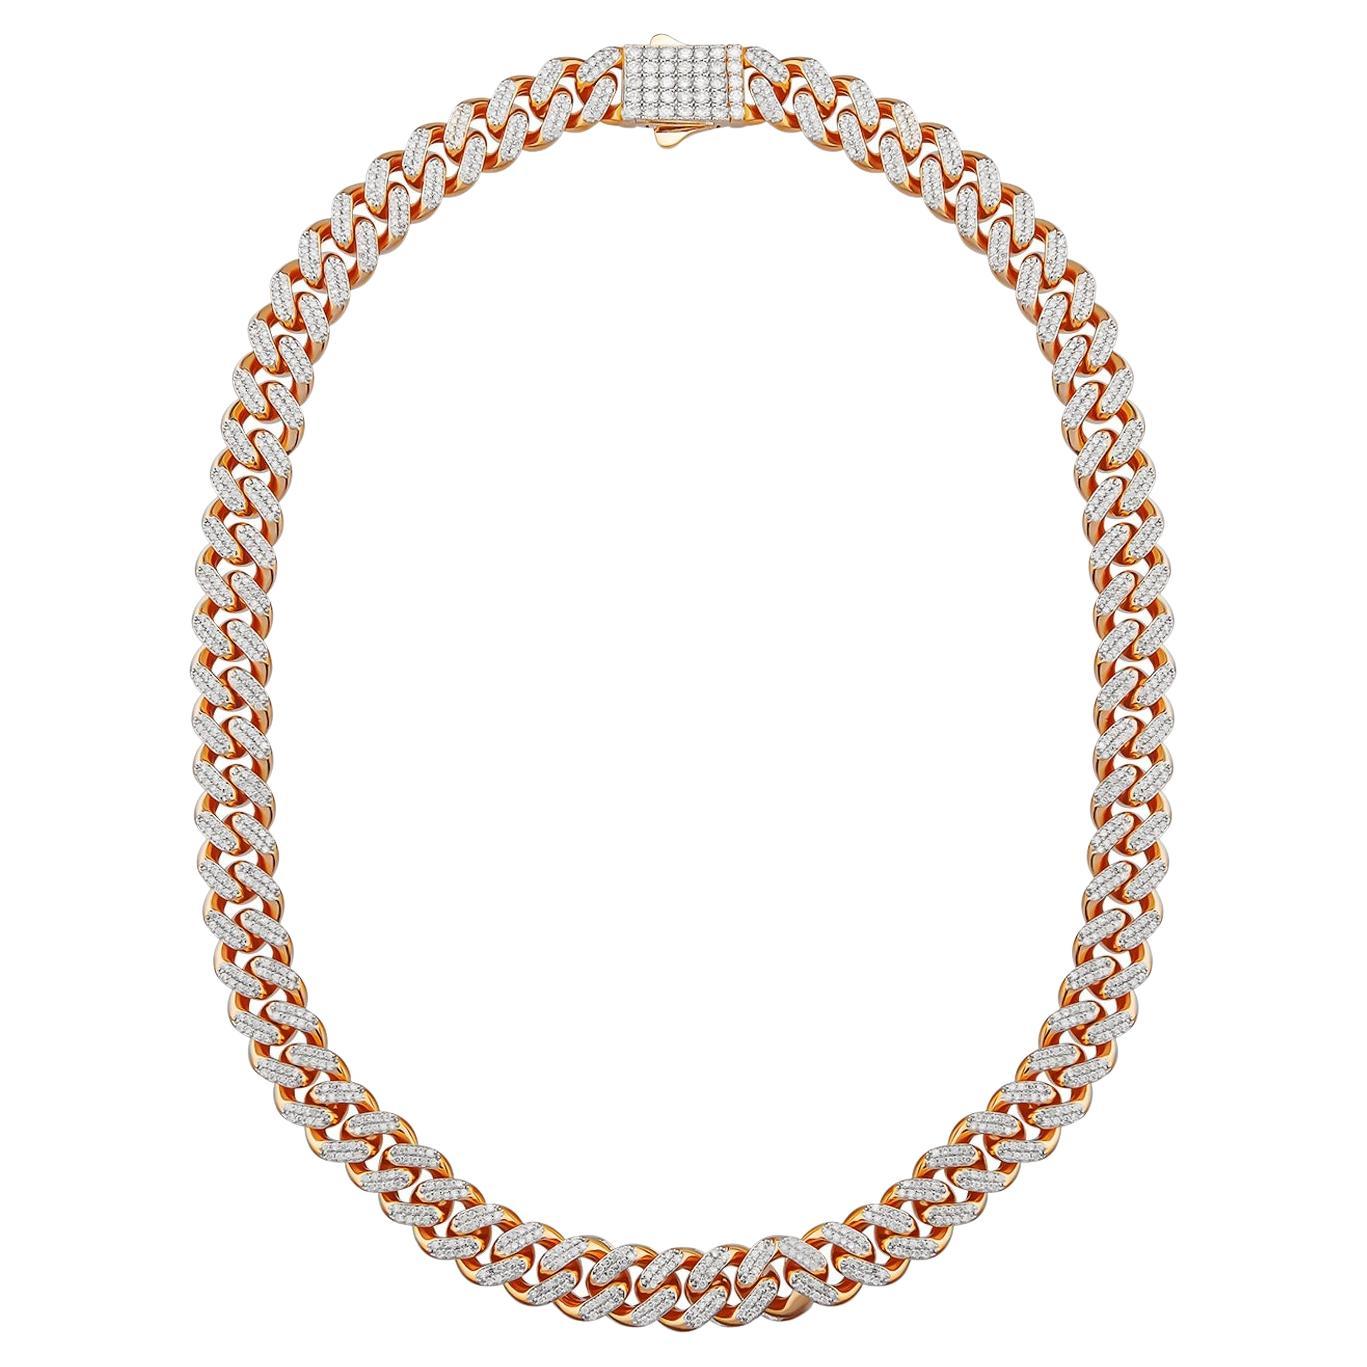 6 Carat Pave Diamond Link Necklace 18K Gold For Sale